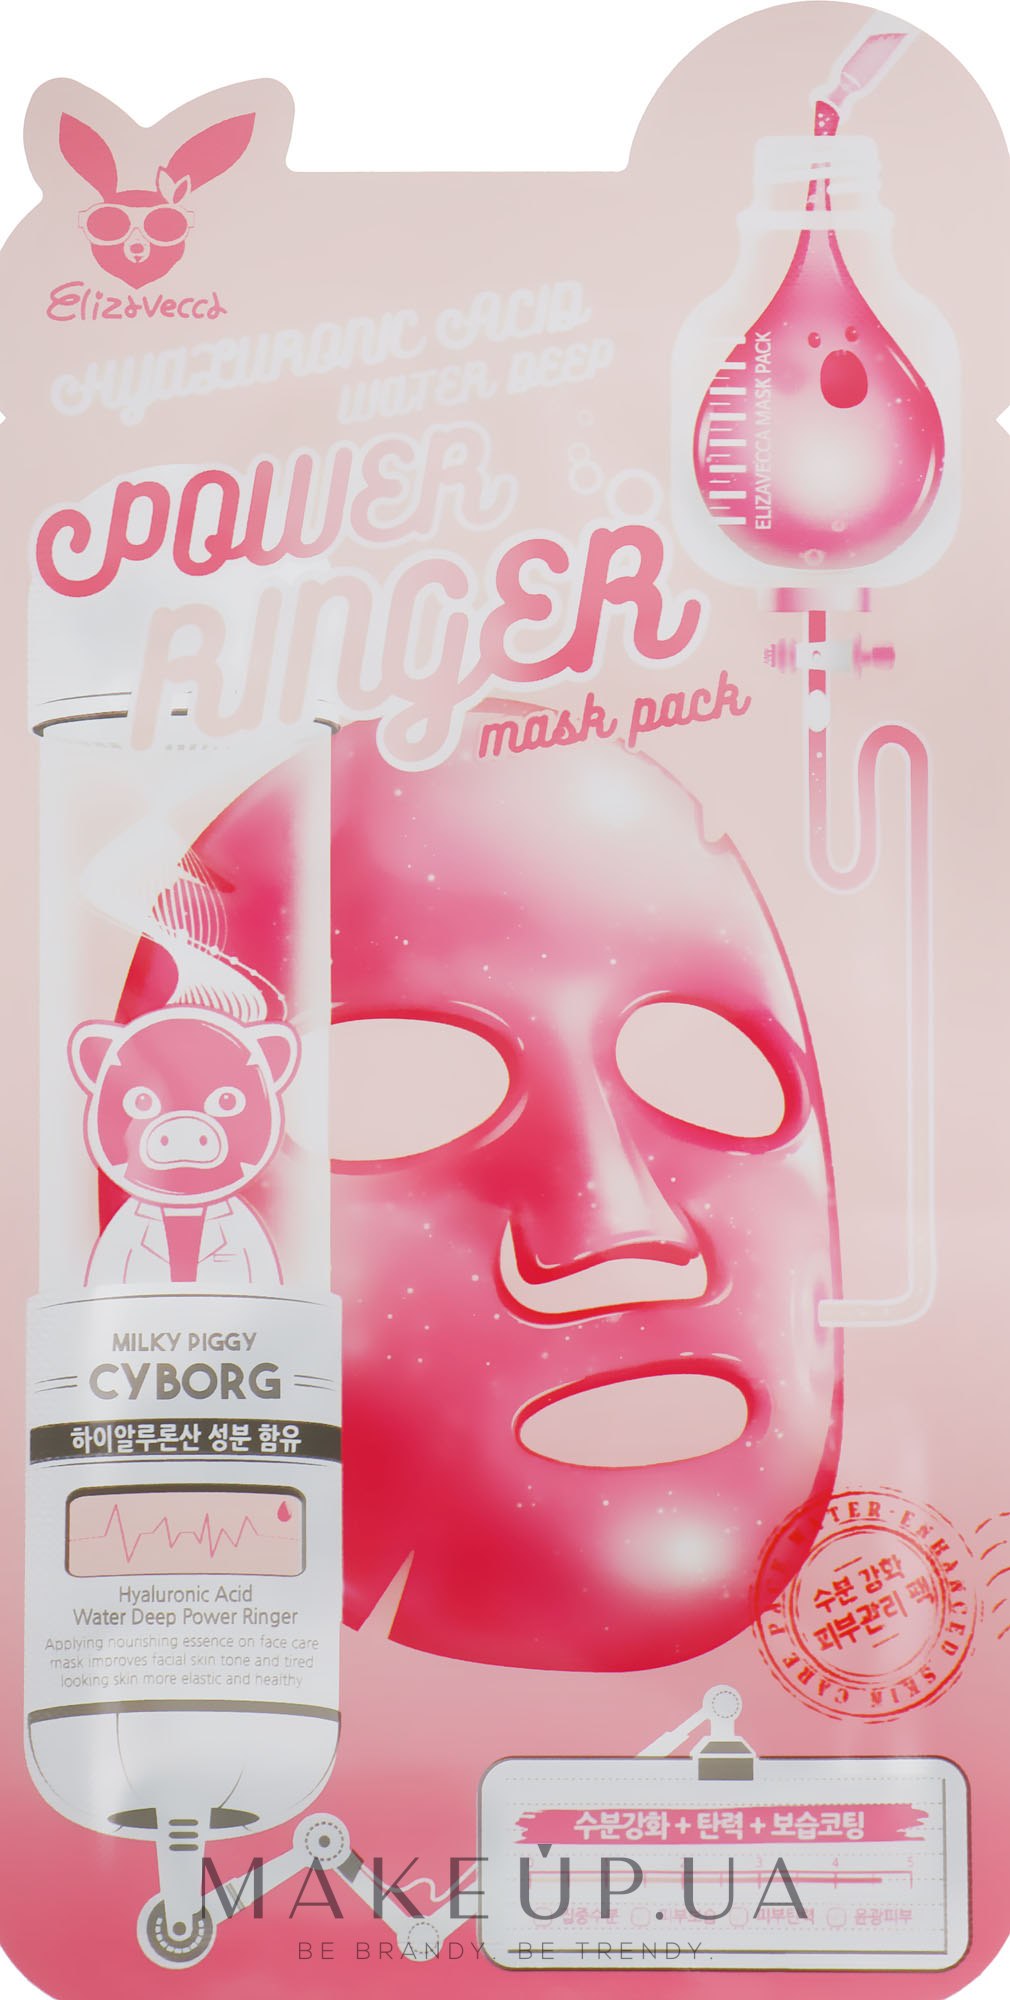 Зволожувальна тканинна маска з гіалуроновою кислотою - Elizavecca Hyaluronic Acid Water Deep Power Ringer Mask Pack — фото 23ml